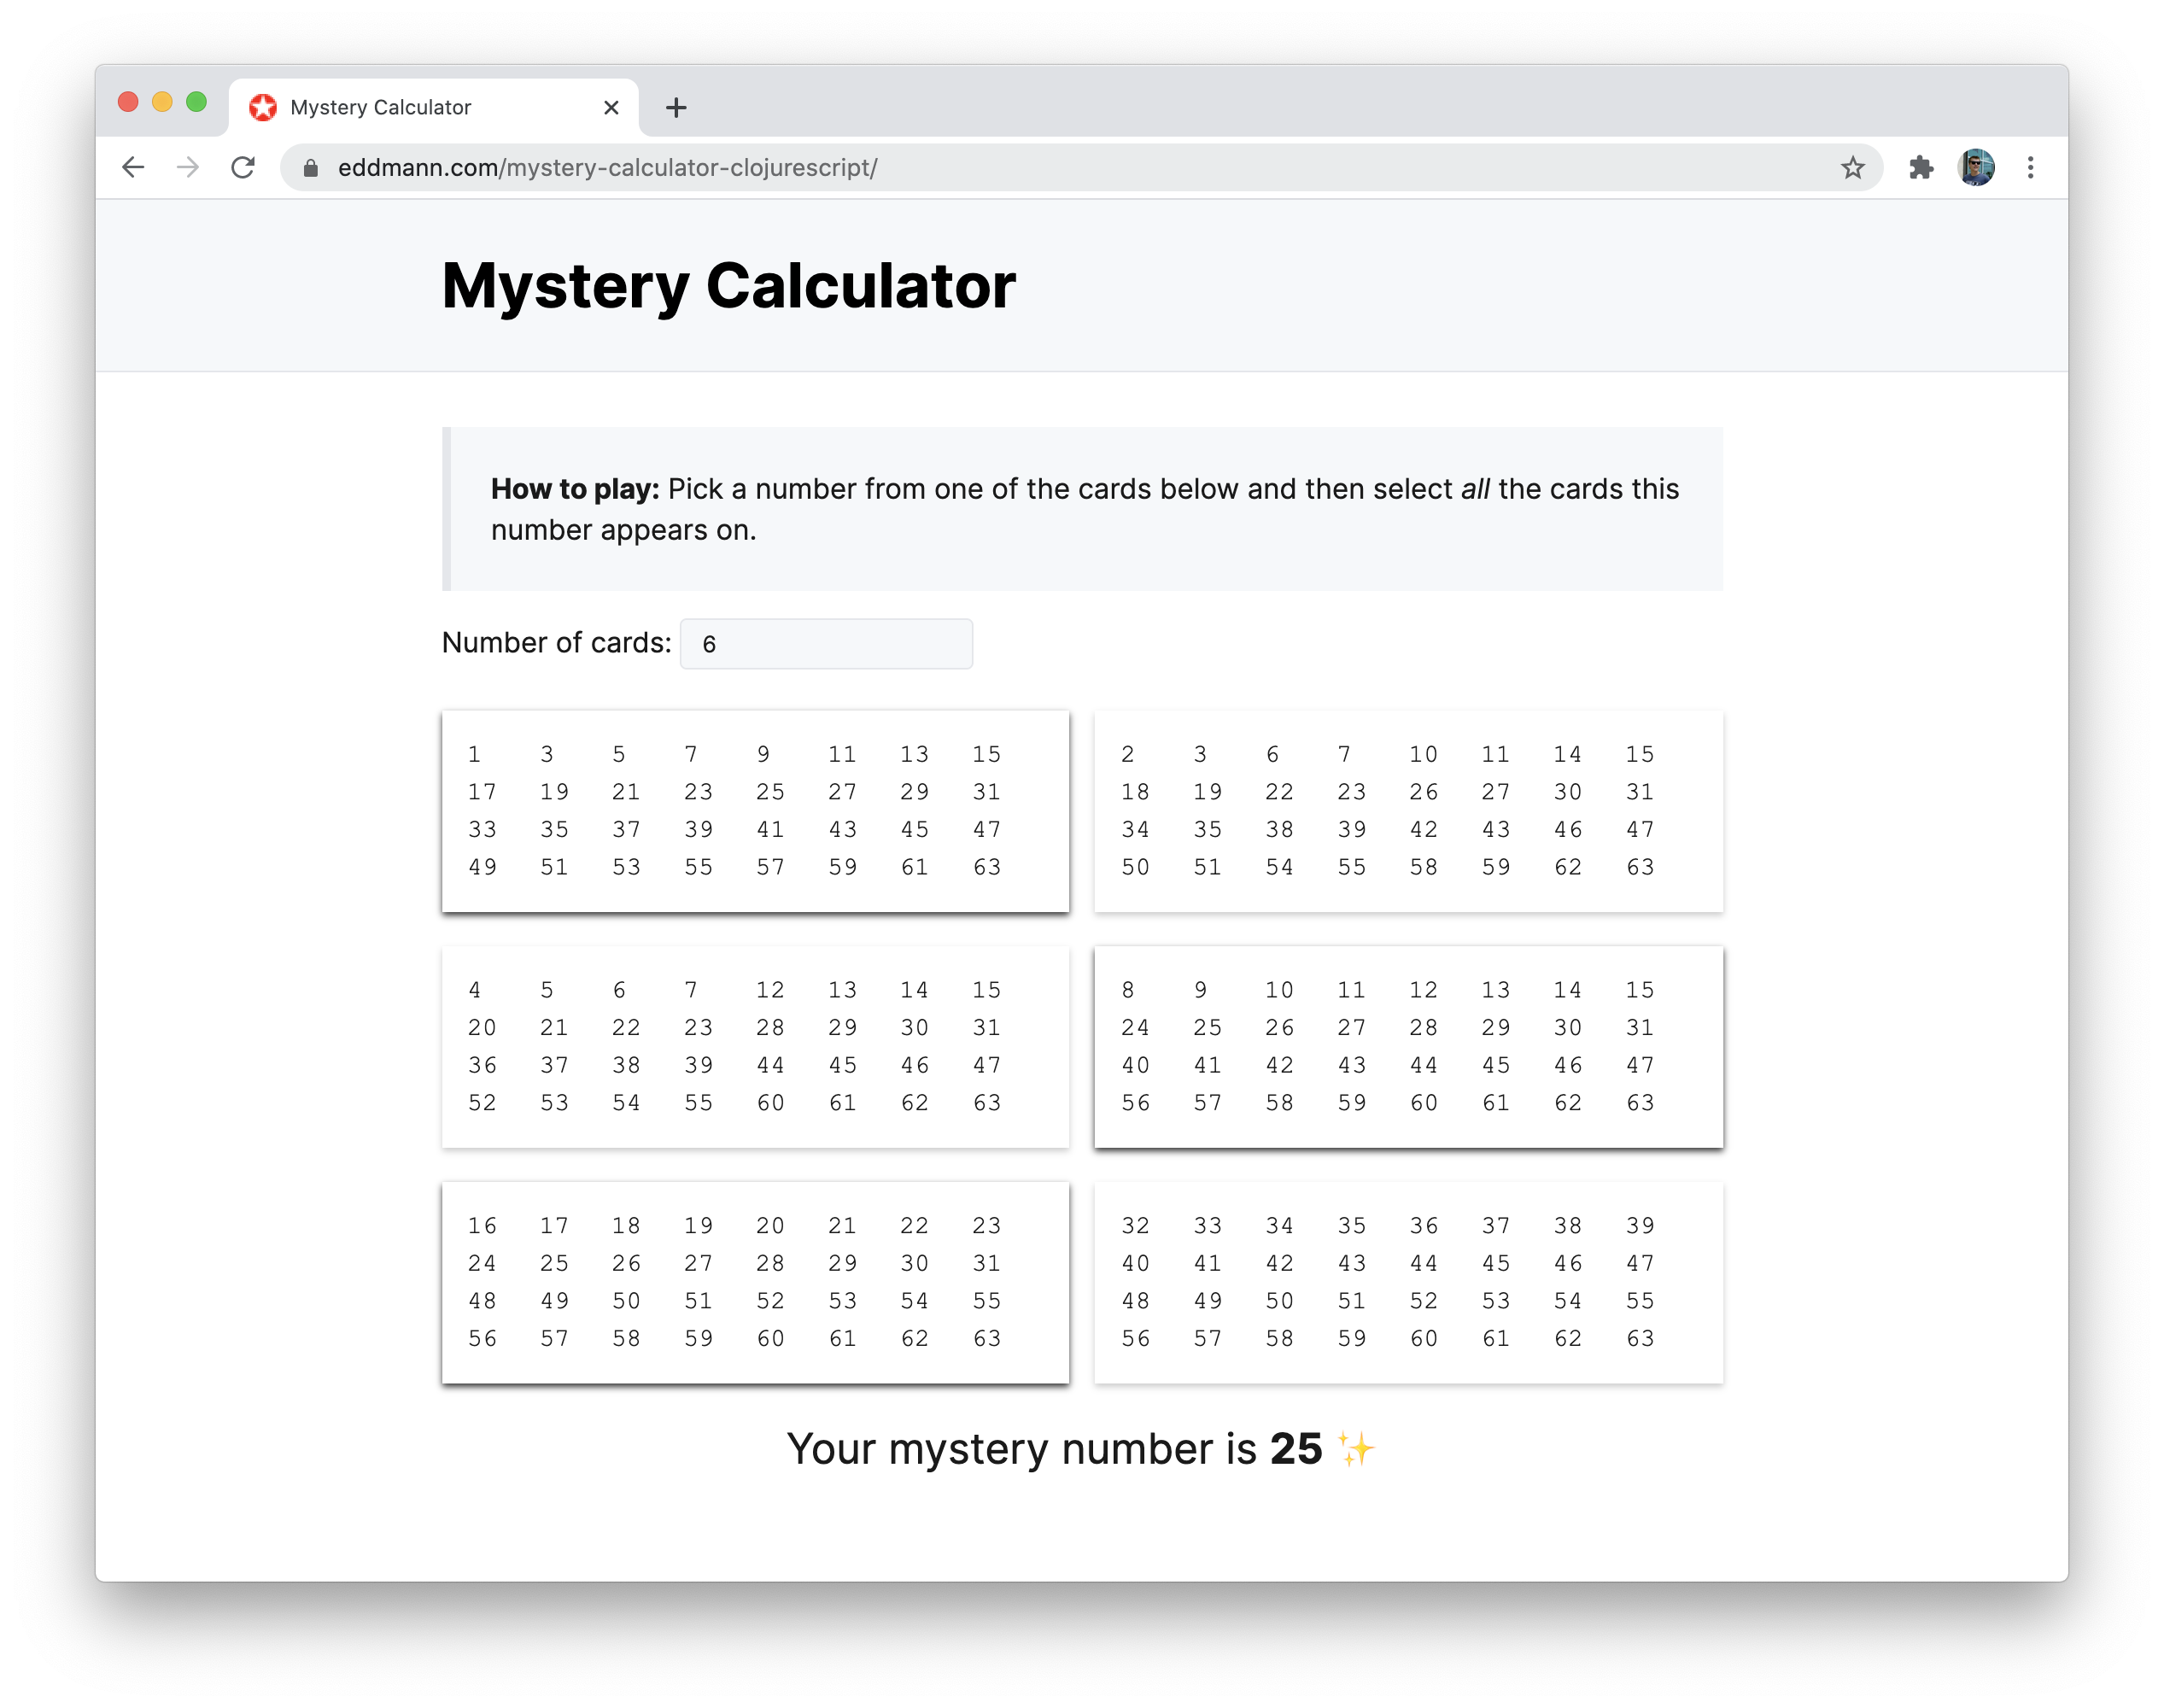 The Mystery Calculator